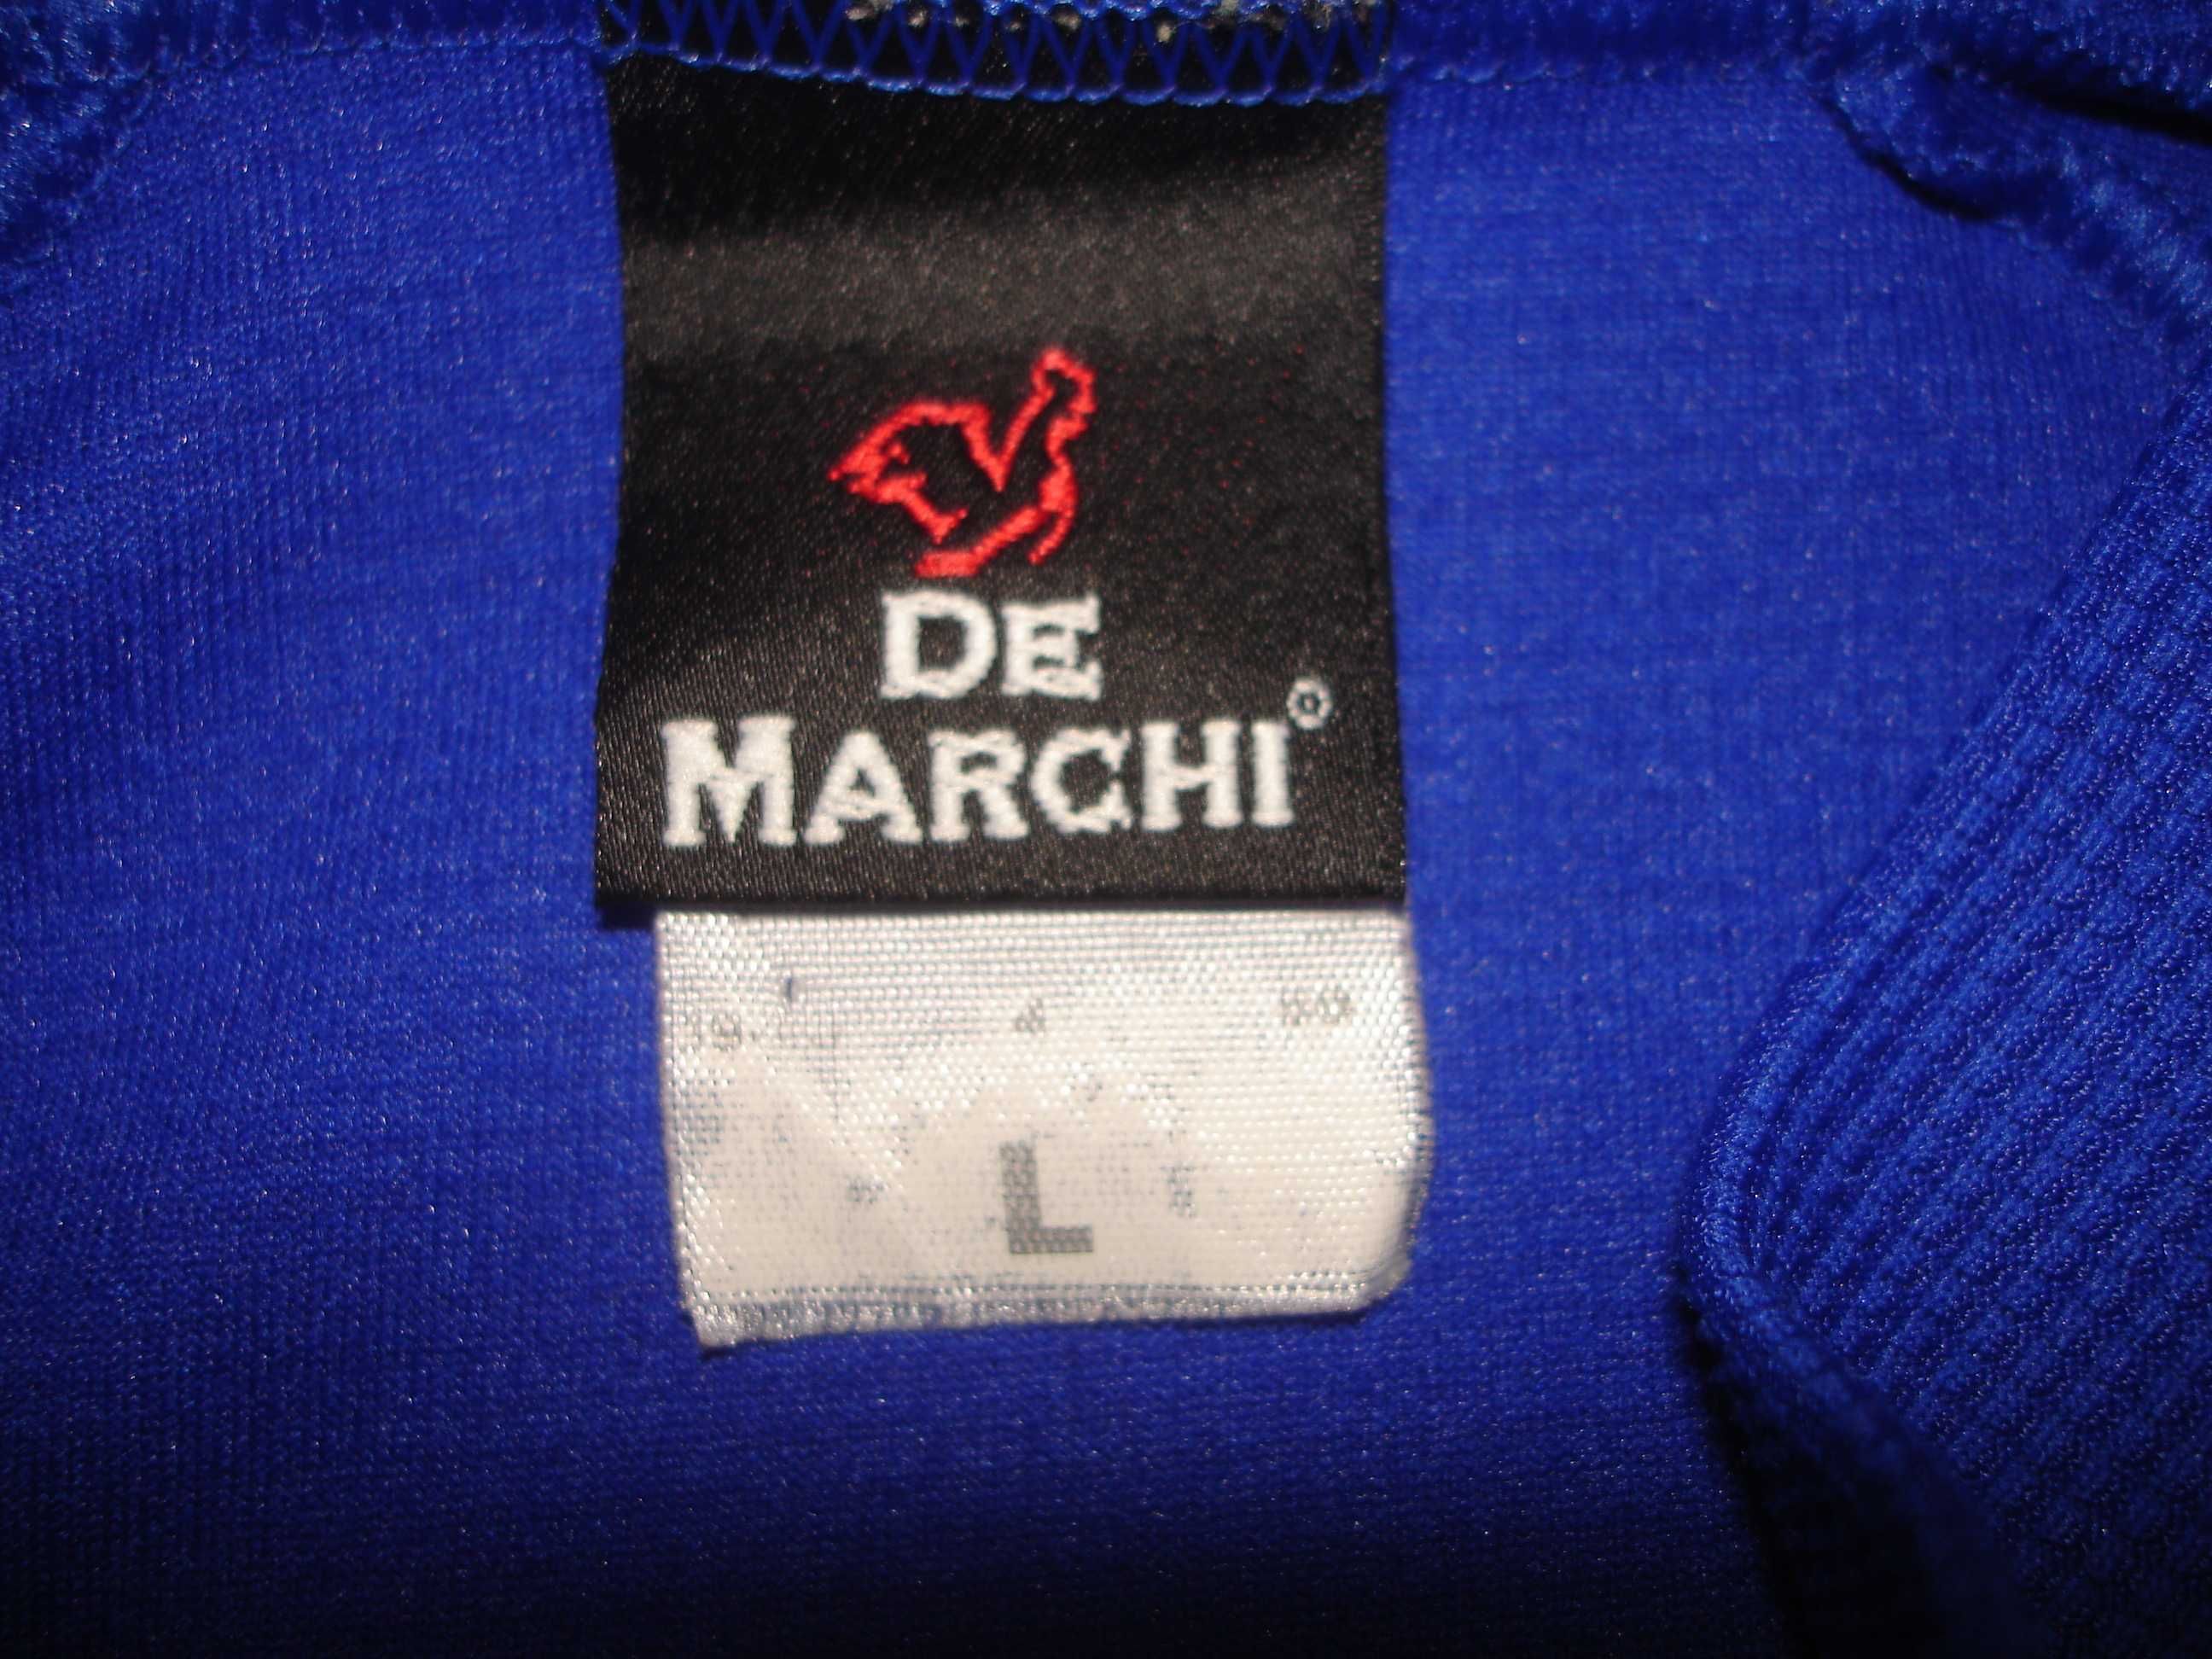 DE MARCHI - Made in ITALY - koszulka kolarska - Rozmiar L